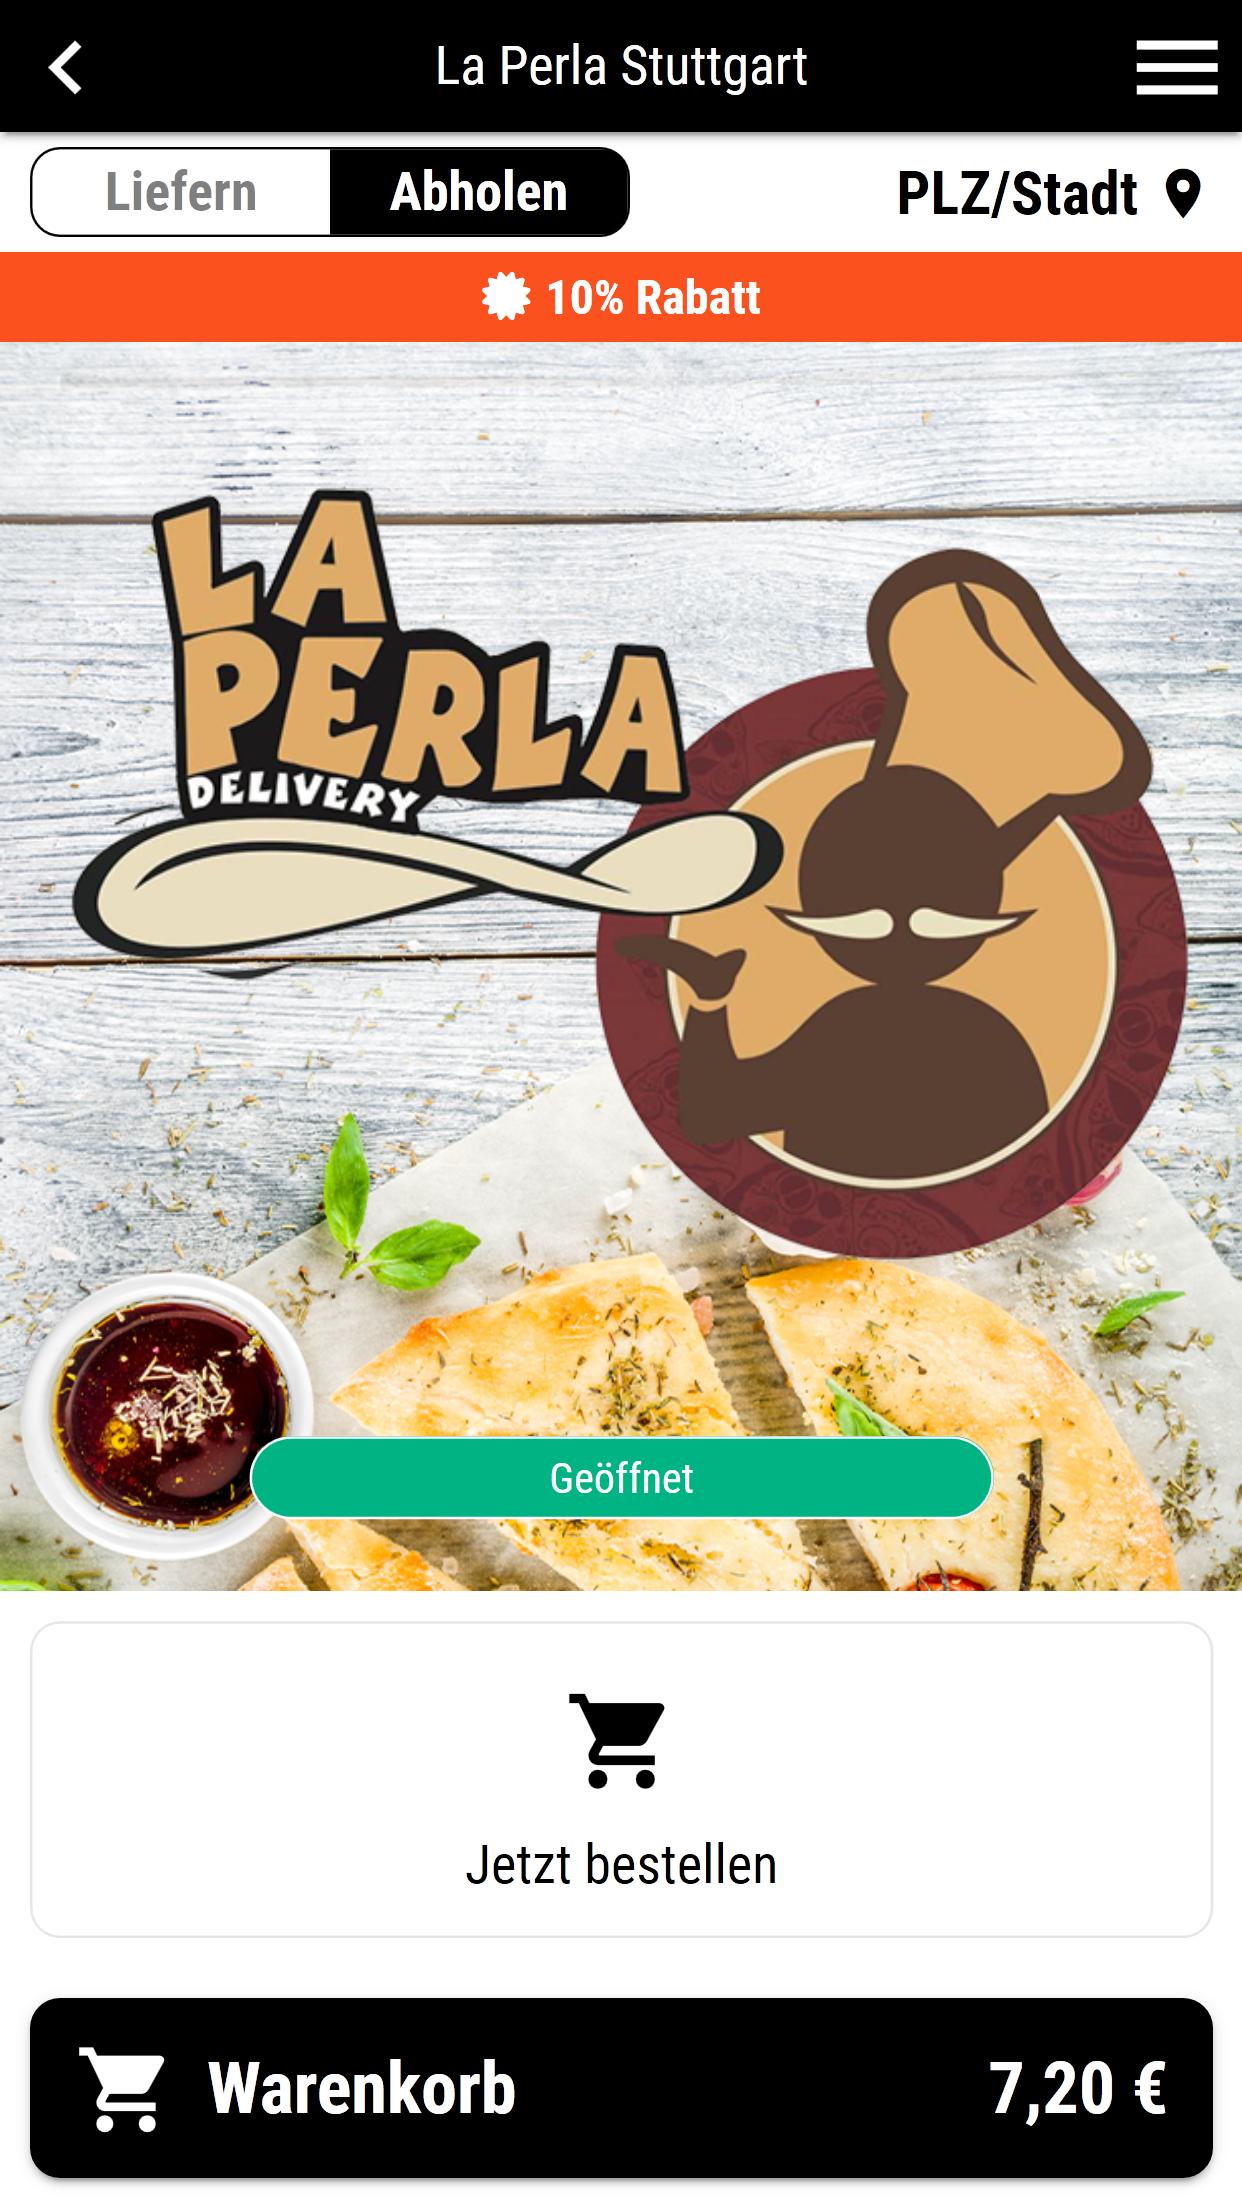 La Perla Stuttgart for Android - APK Download